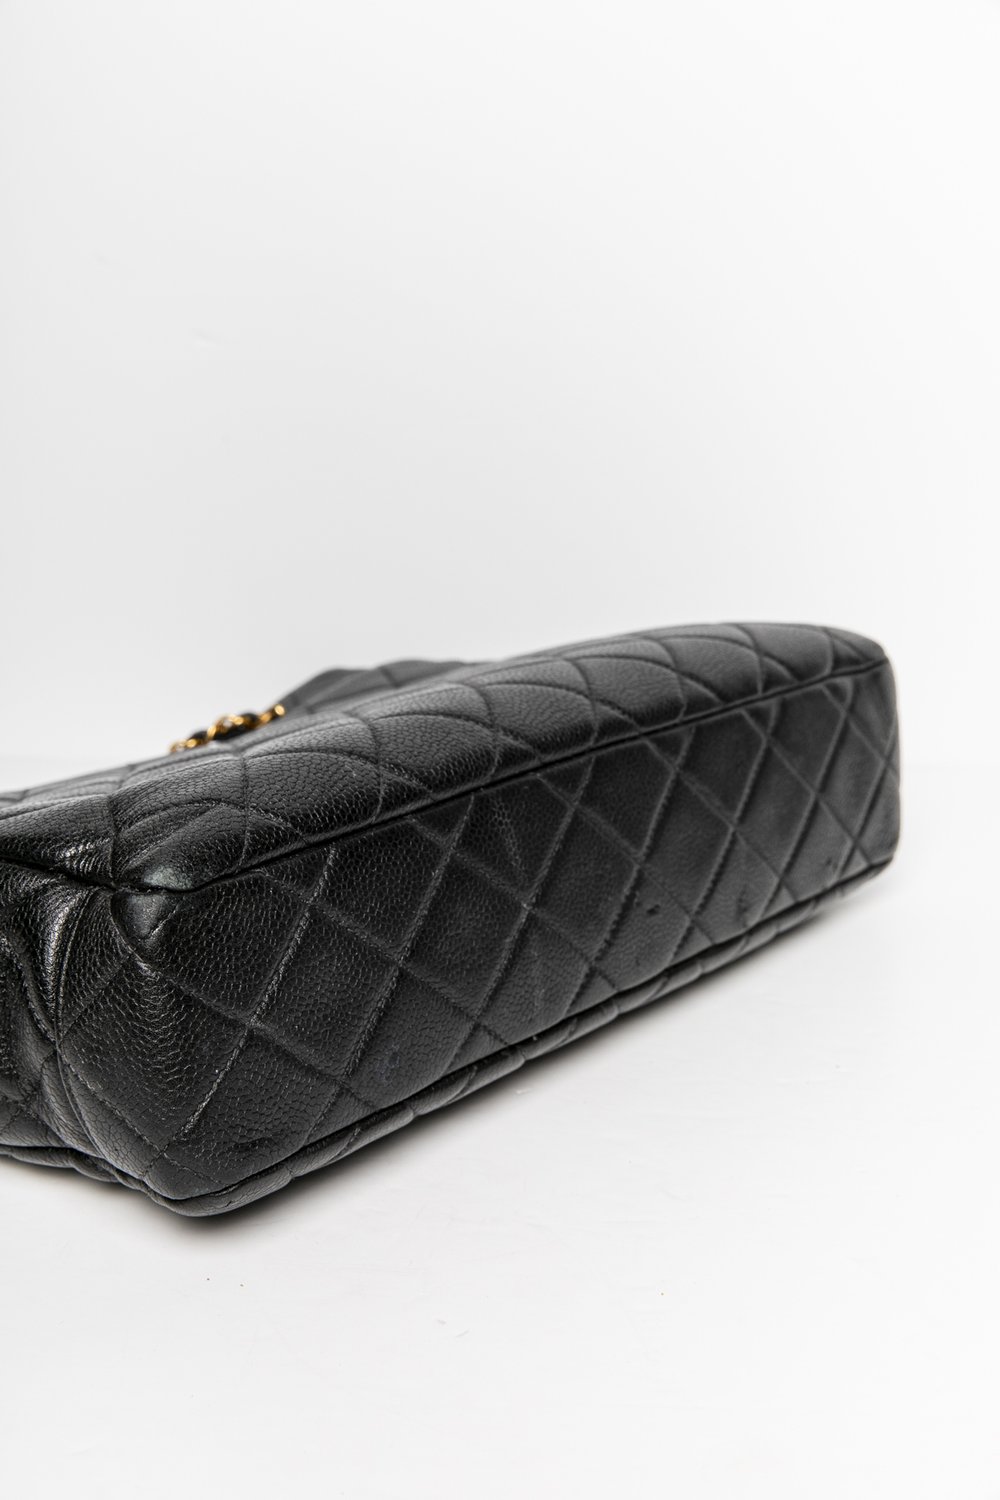 Chanel '90s Vintage Black Caviar Leather CC Timeless Portfolio Tote Bag